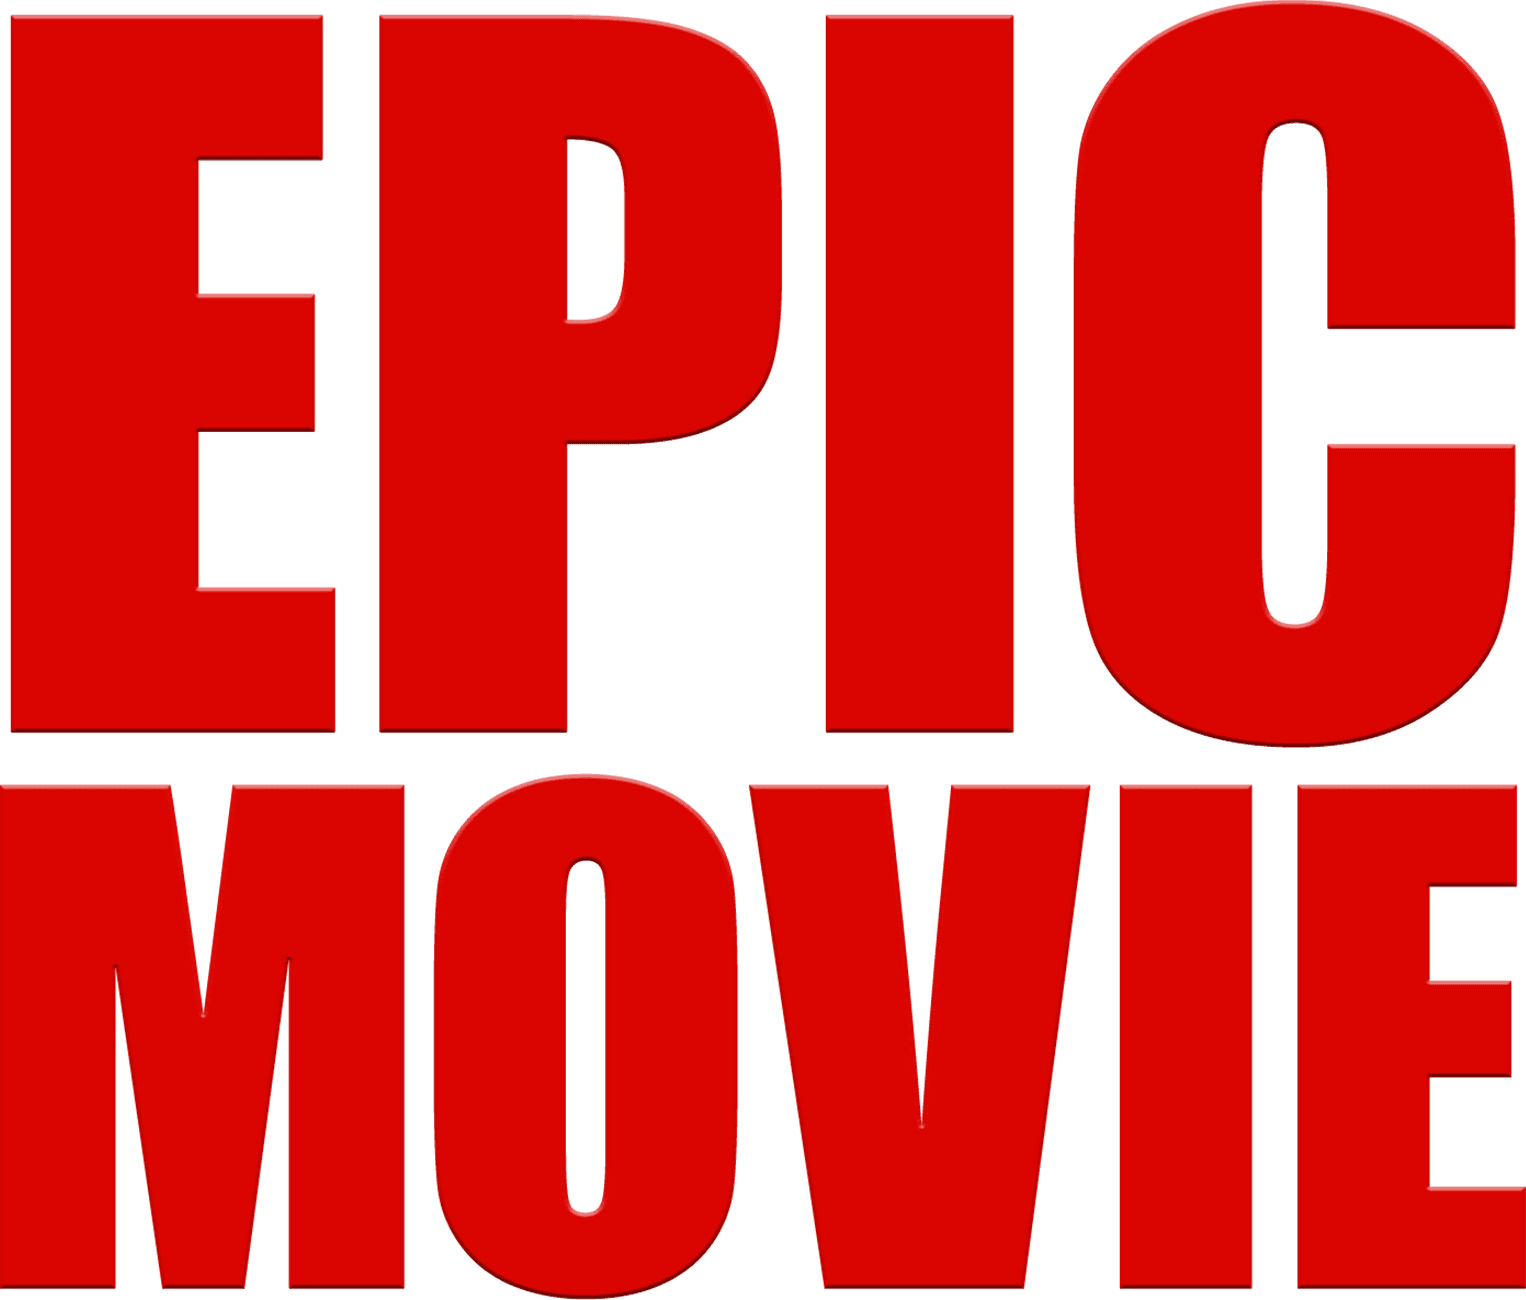 Epic Movie logo